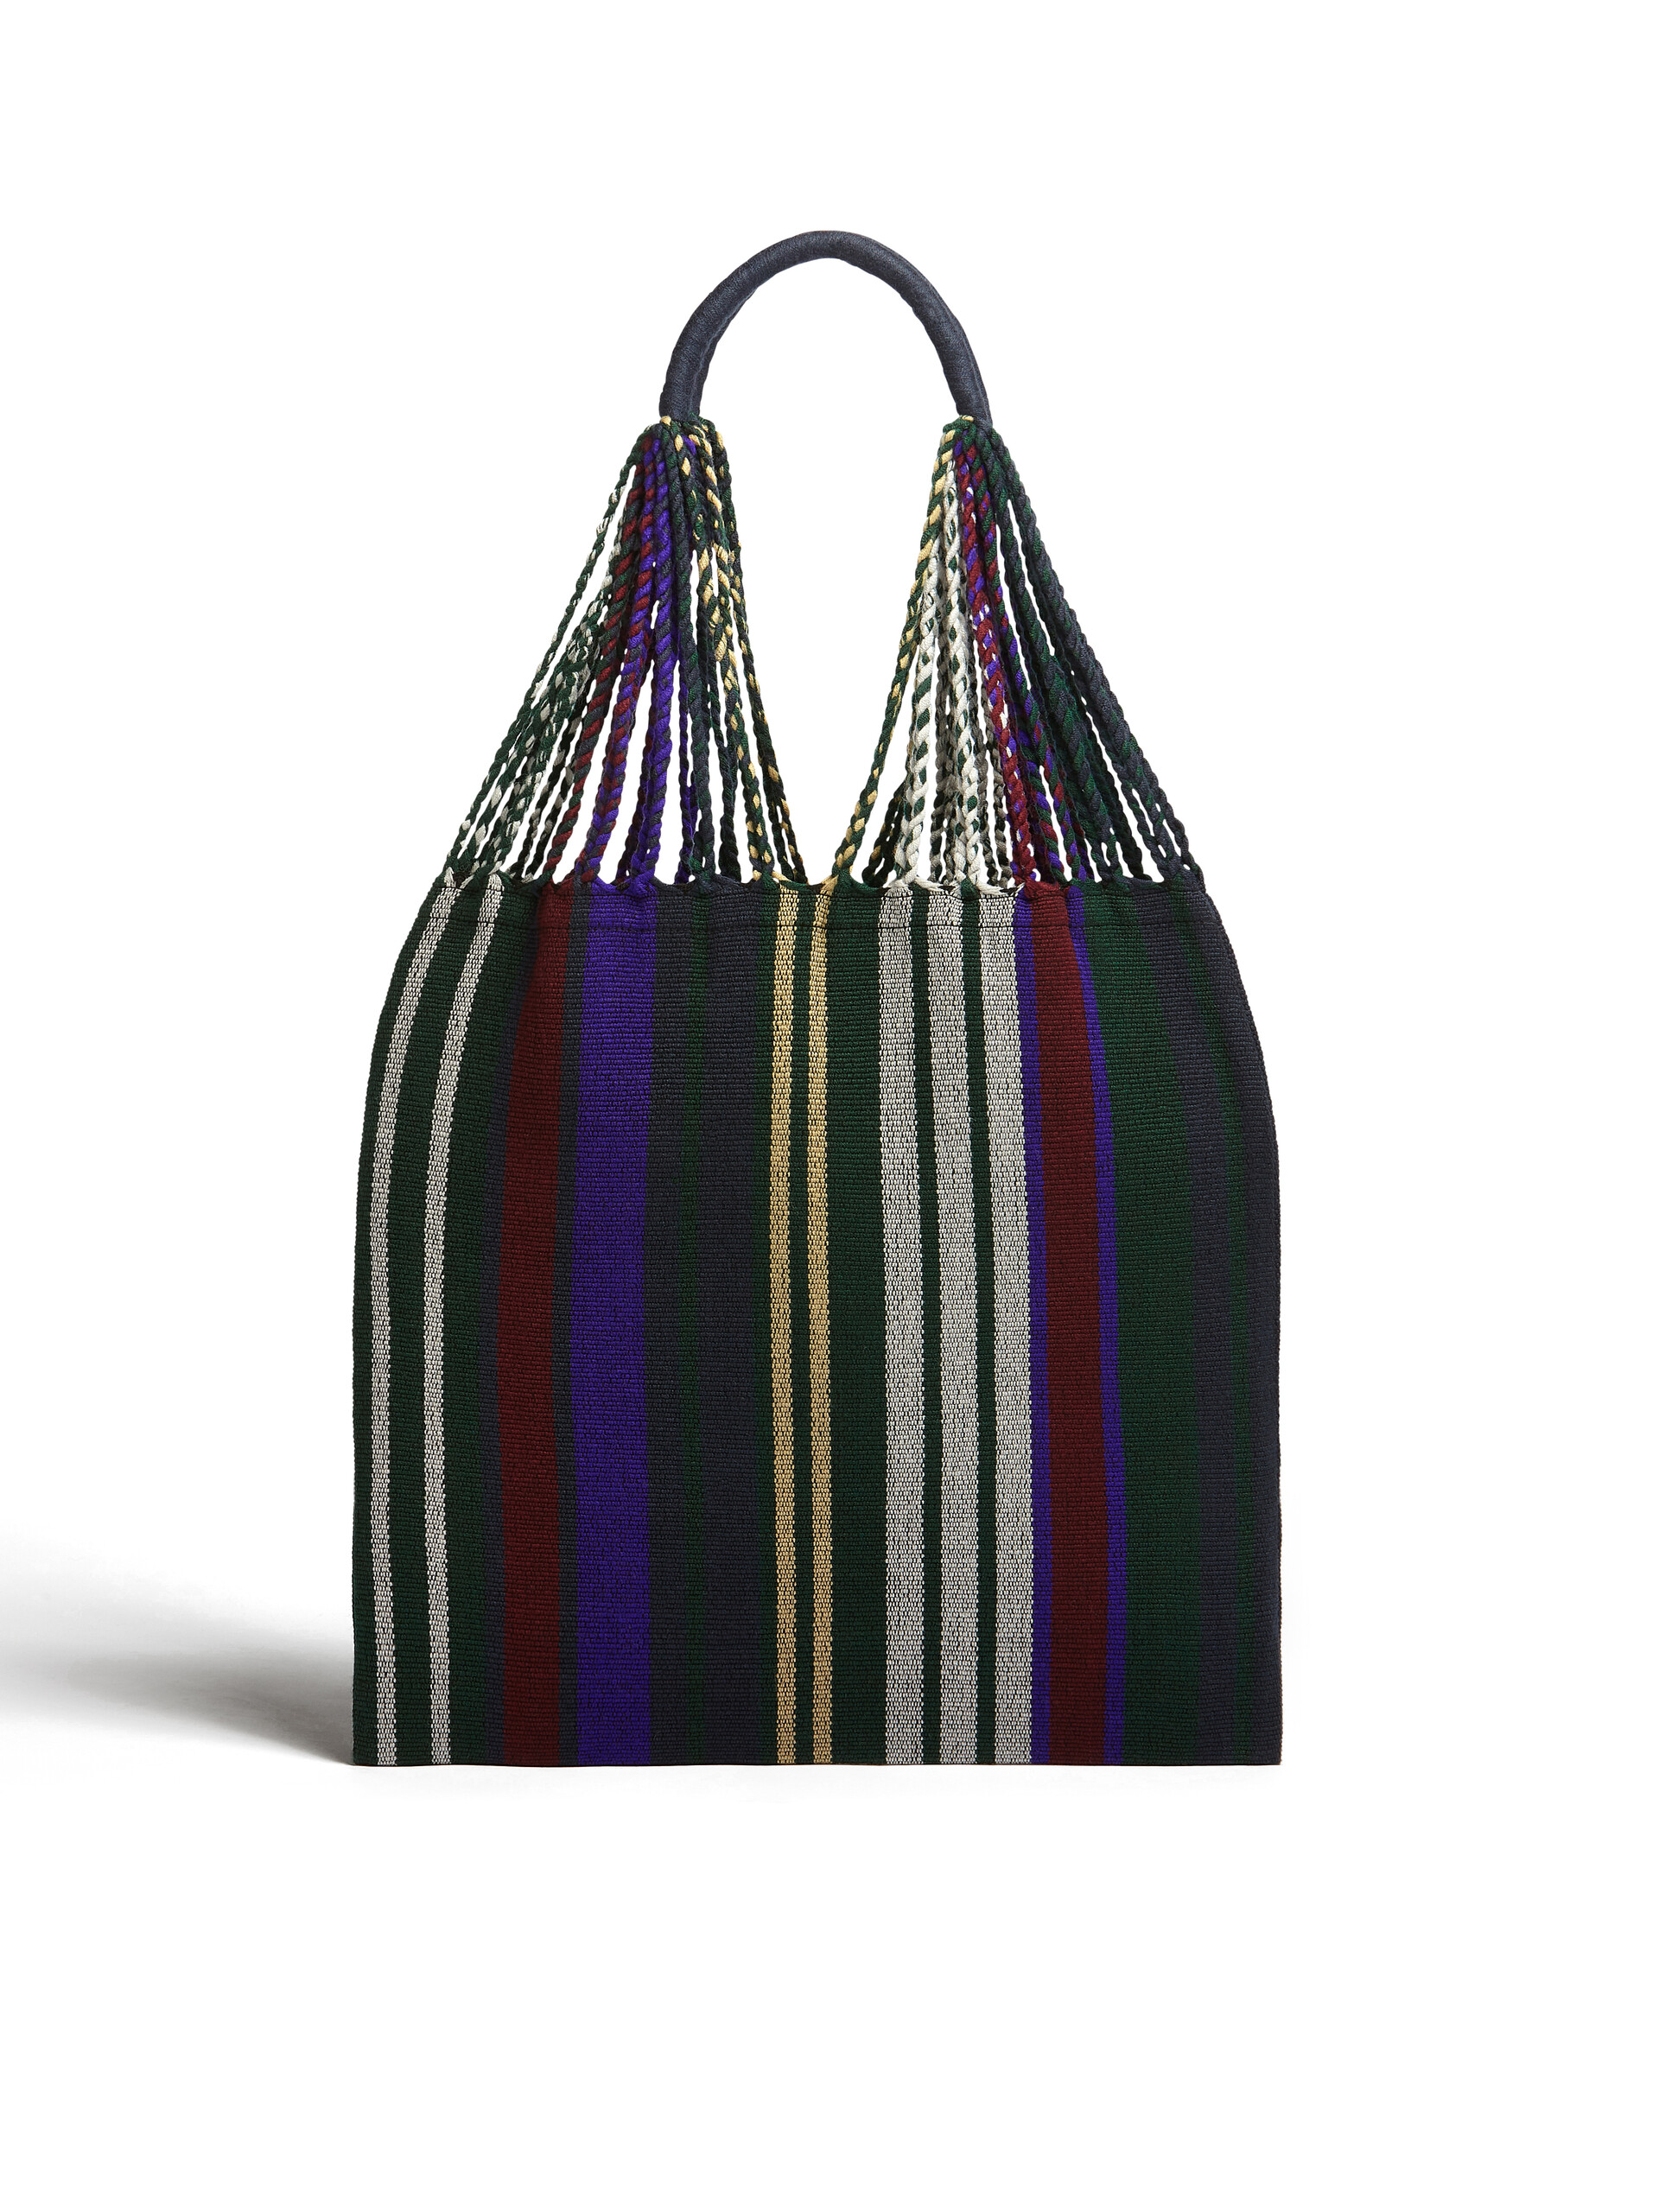 MARNI MARKET HAMMOCK bag in multicolour lilac polyester - Bags - Image 3